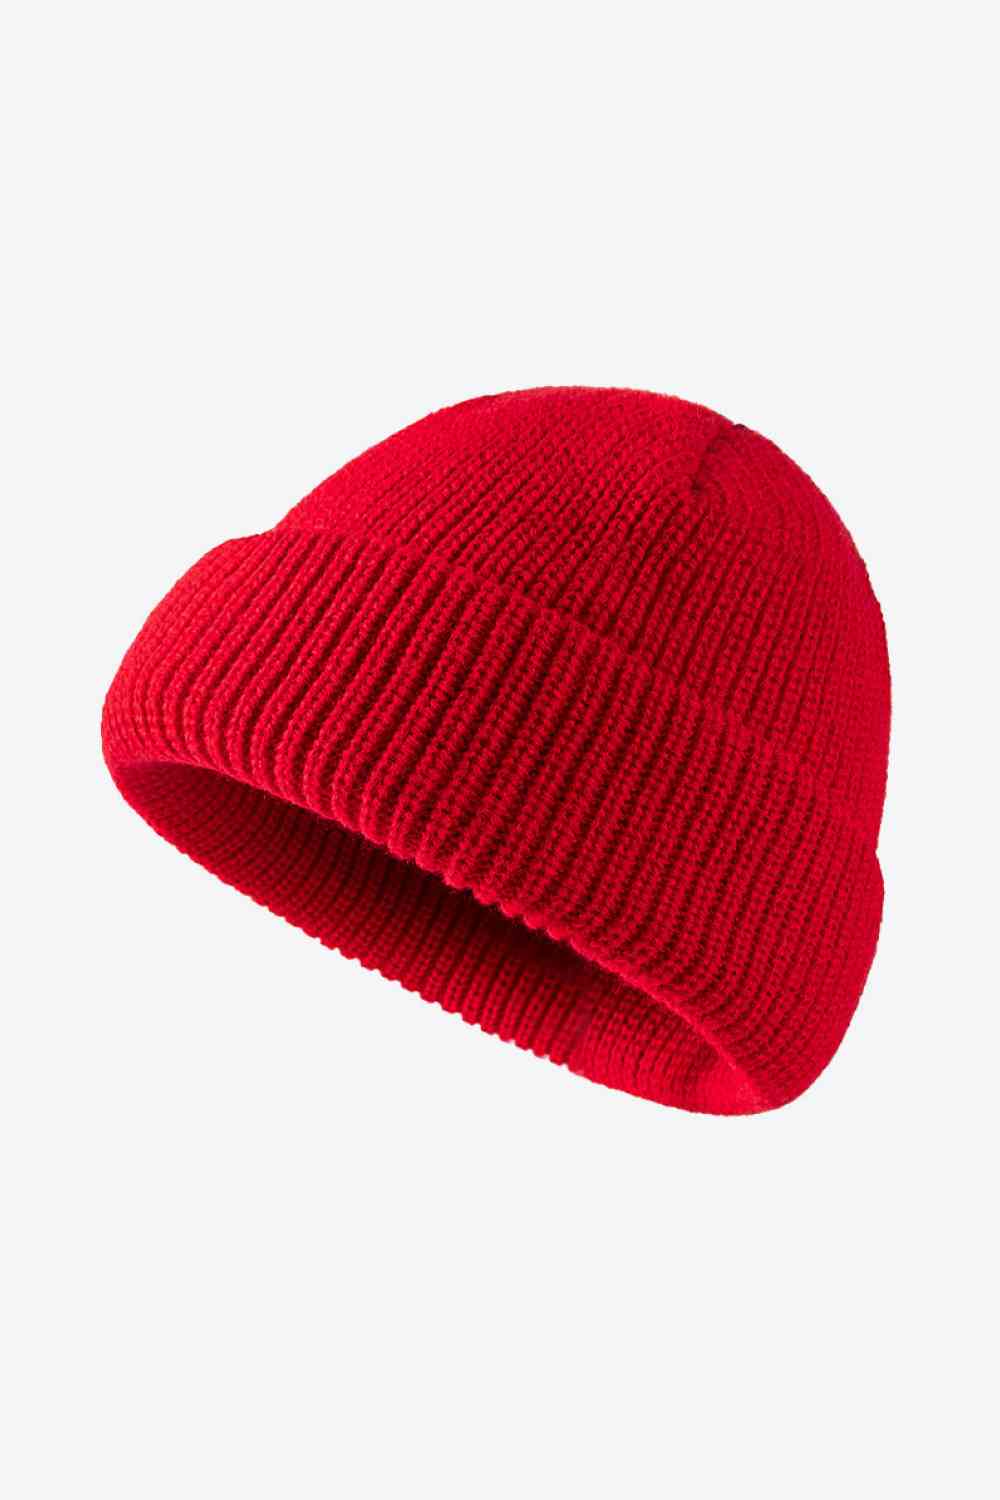 CHIC HATZ Calling For Winter Hat Rib-Knit Beanie